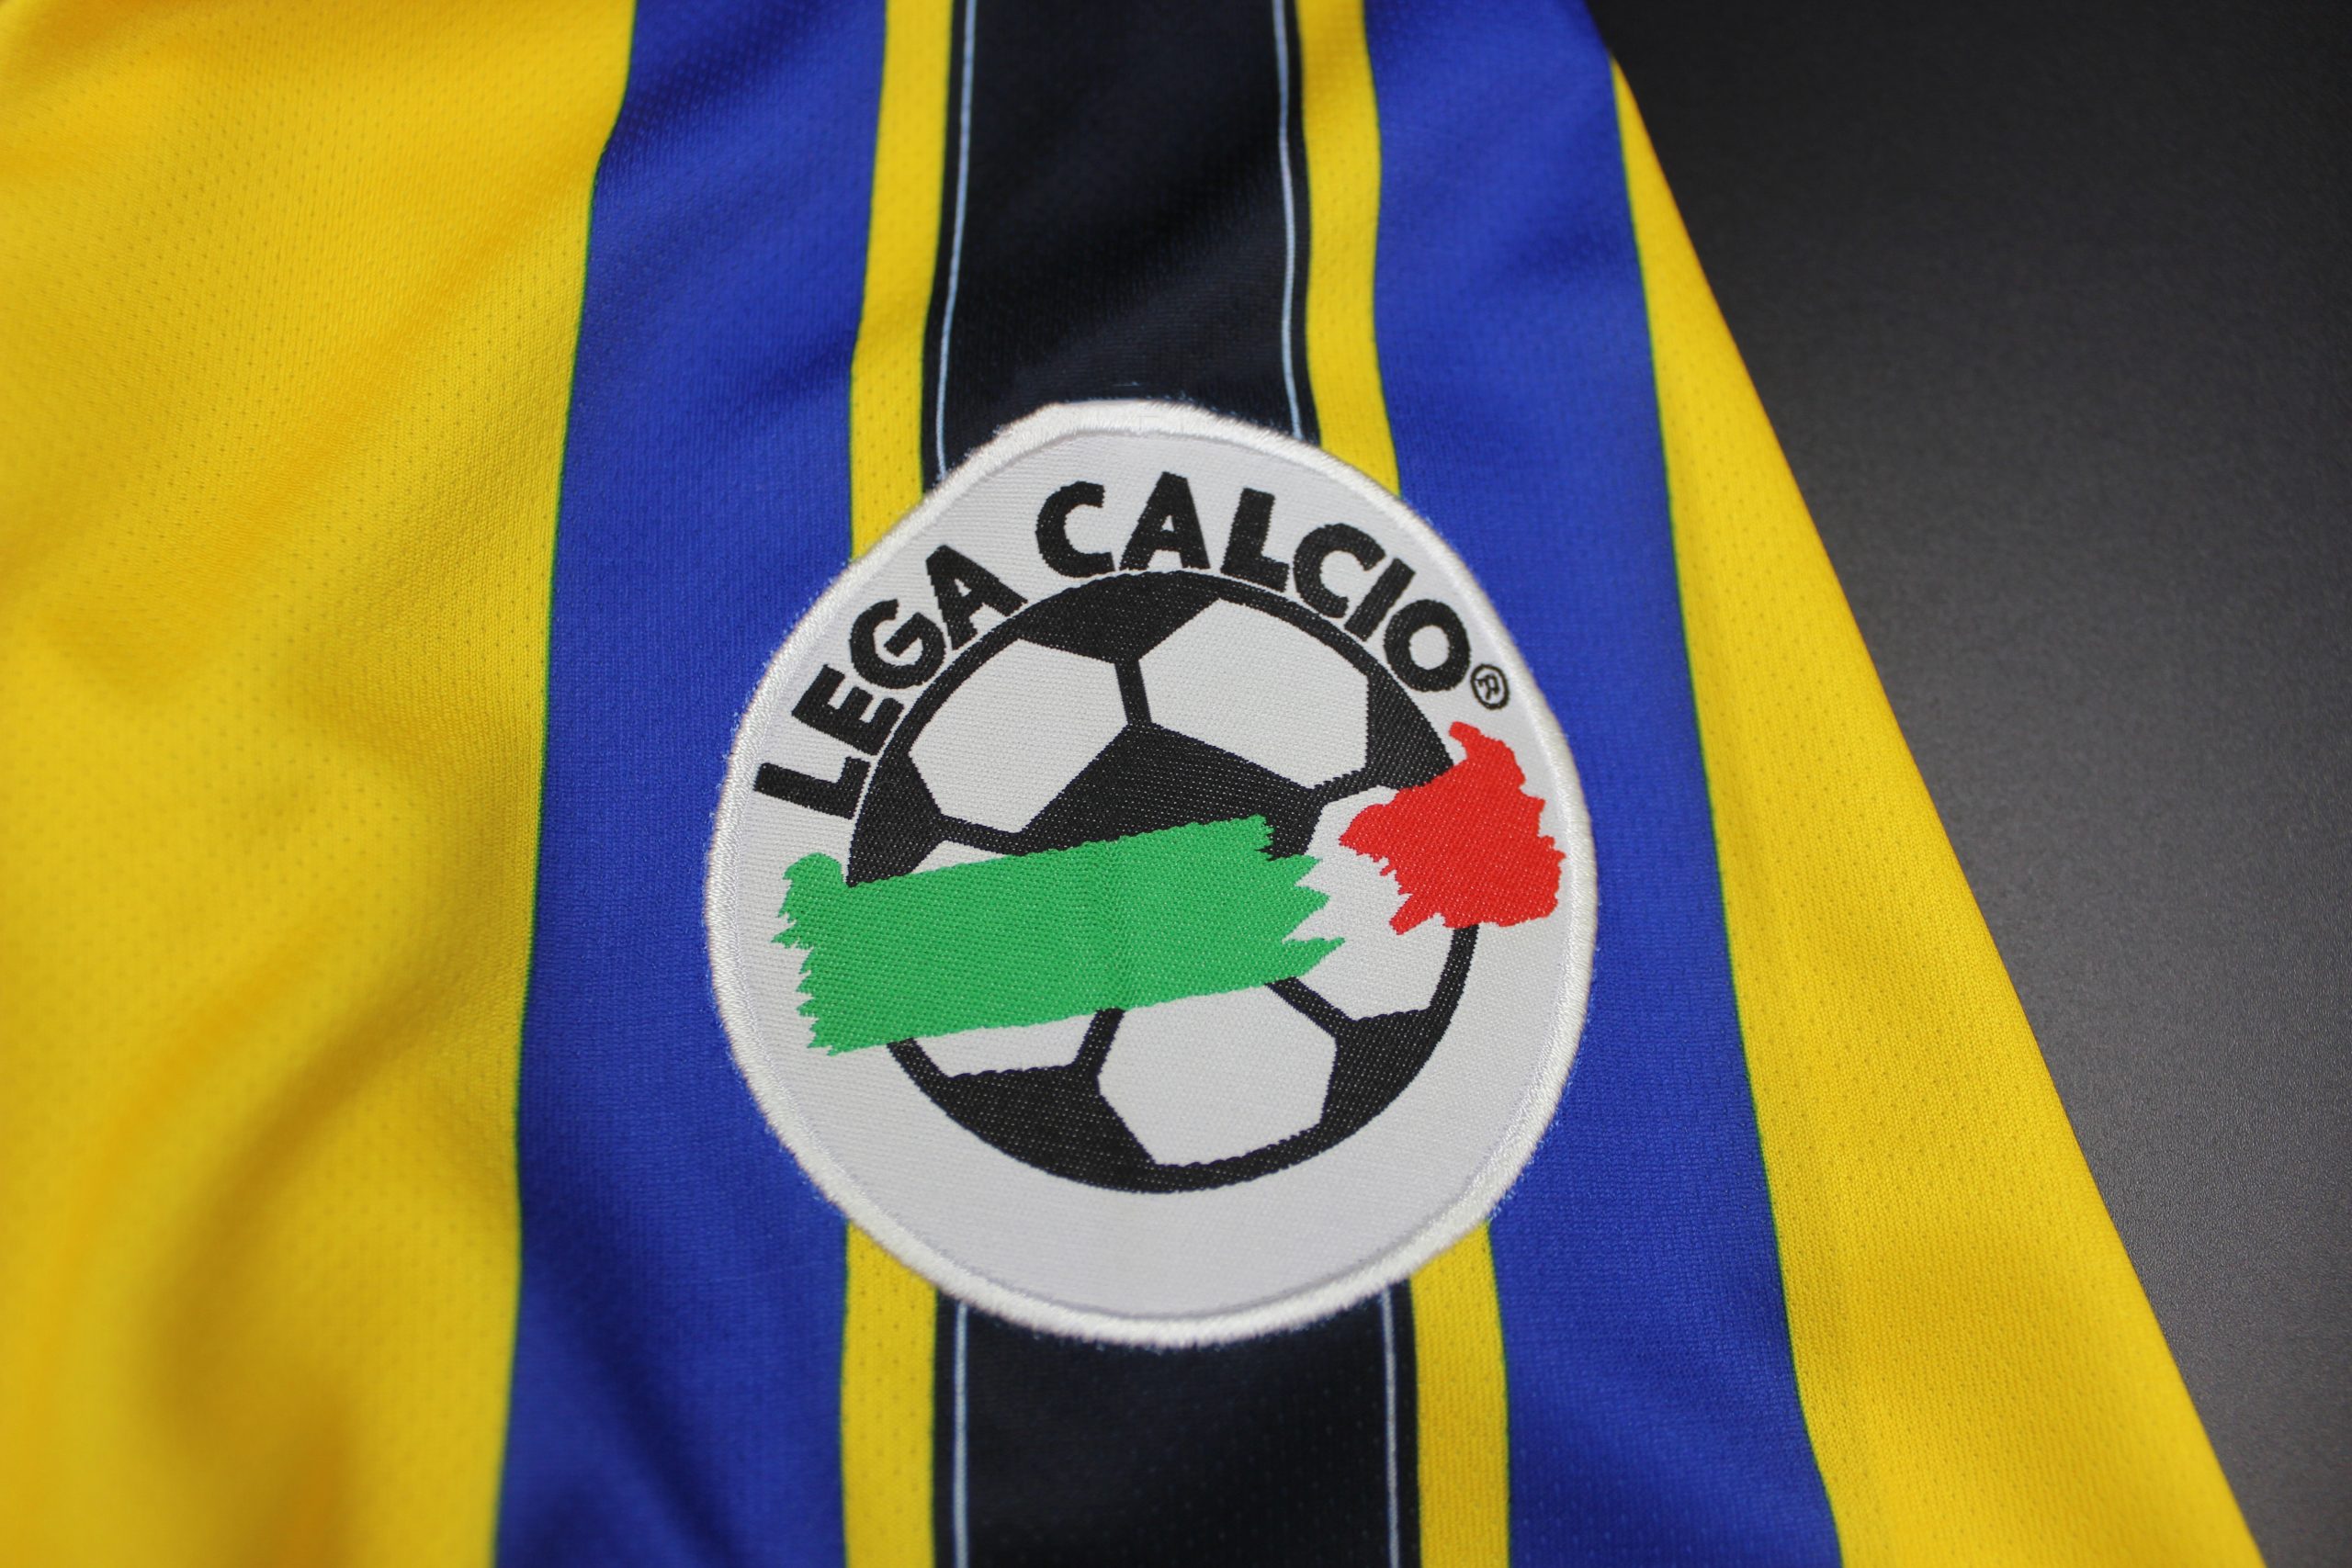 Ferro Carril Oeste Home football shirt 1999 - 2000. Sponsored by Parmalat